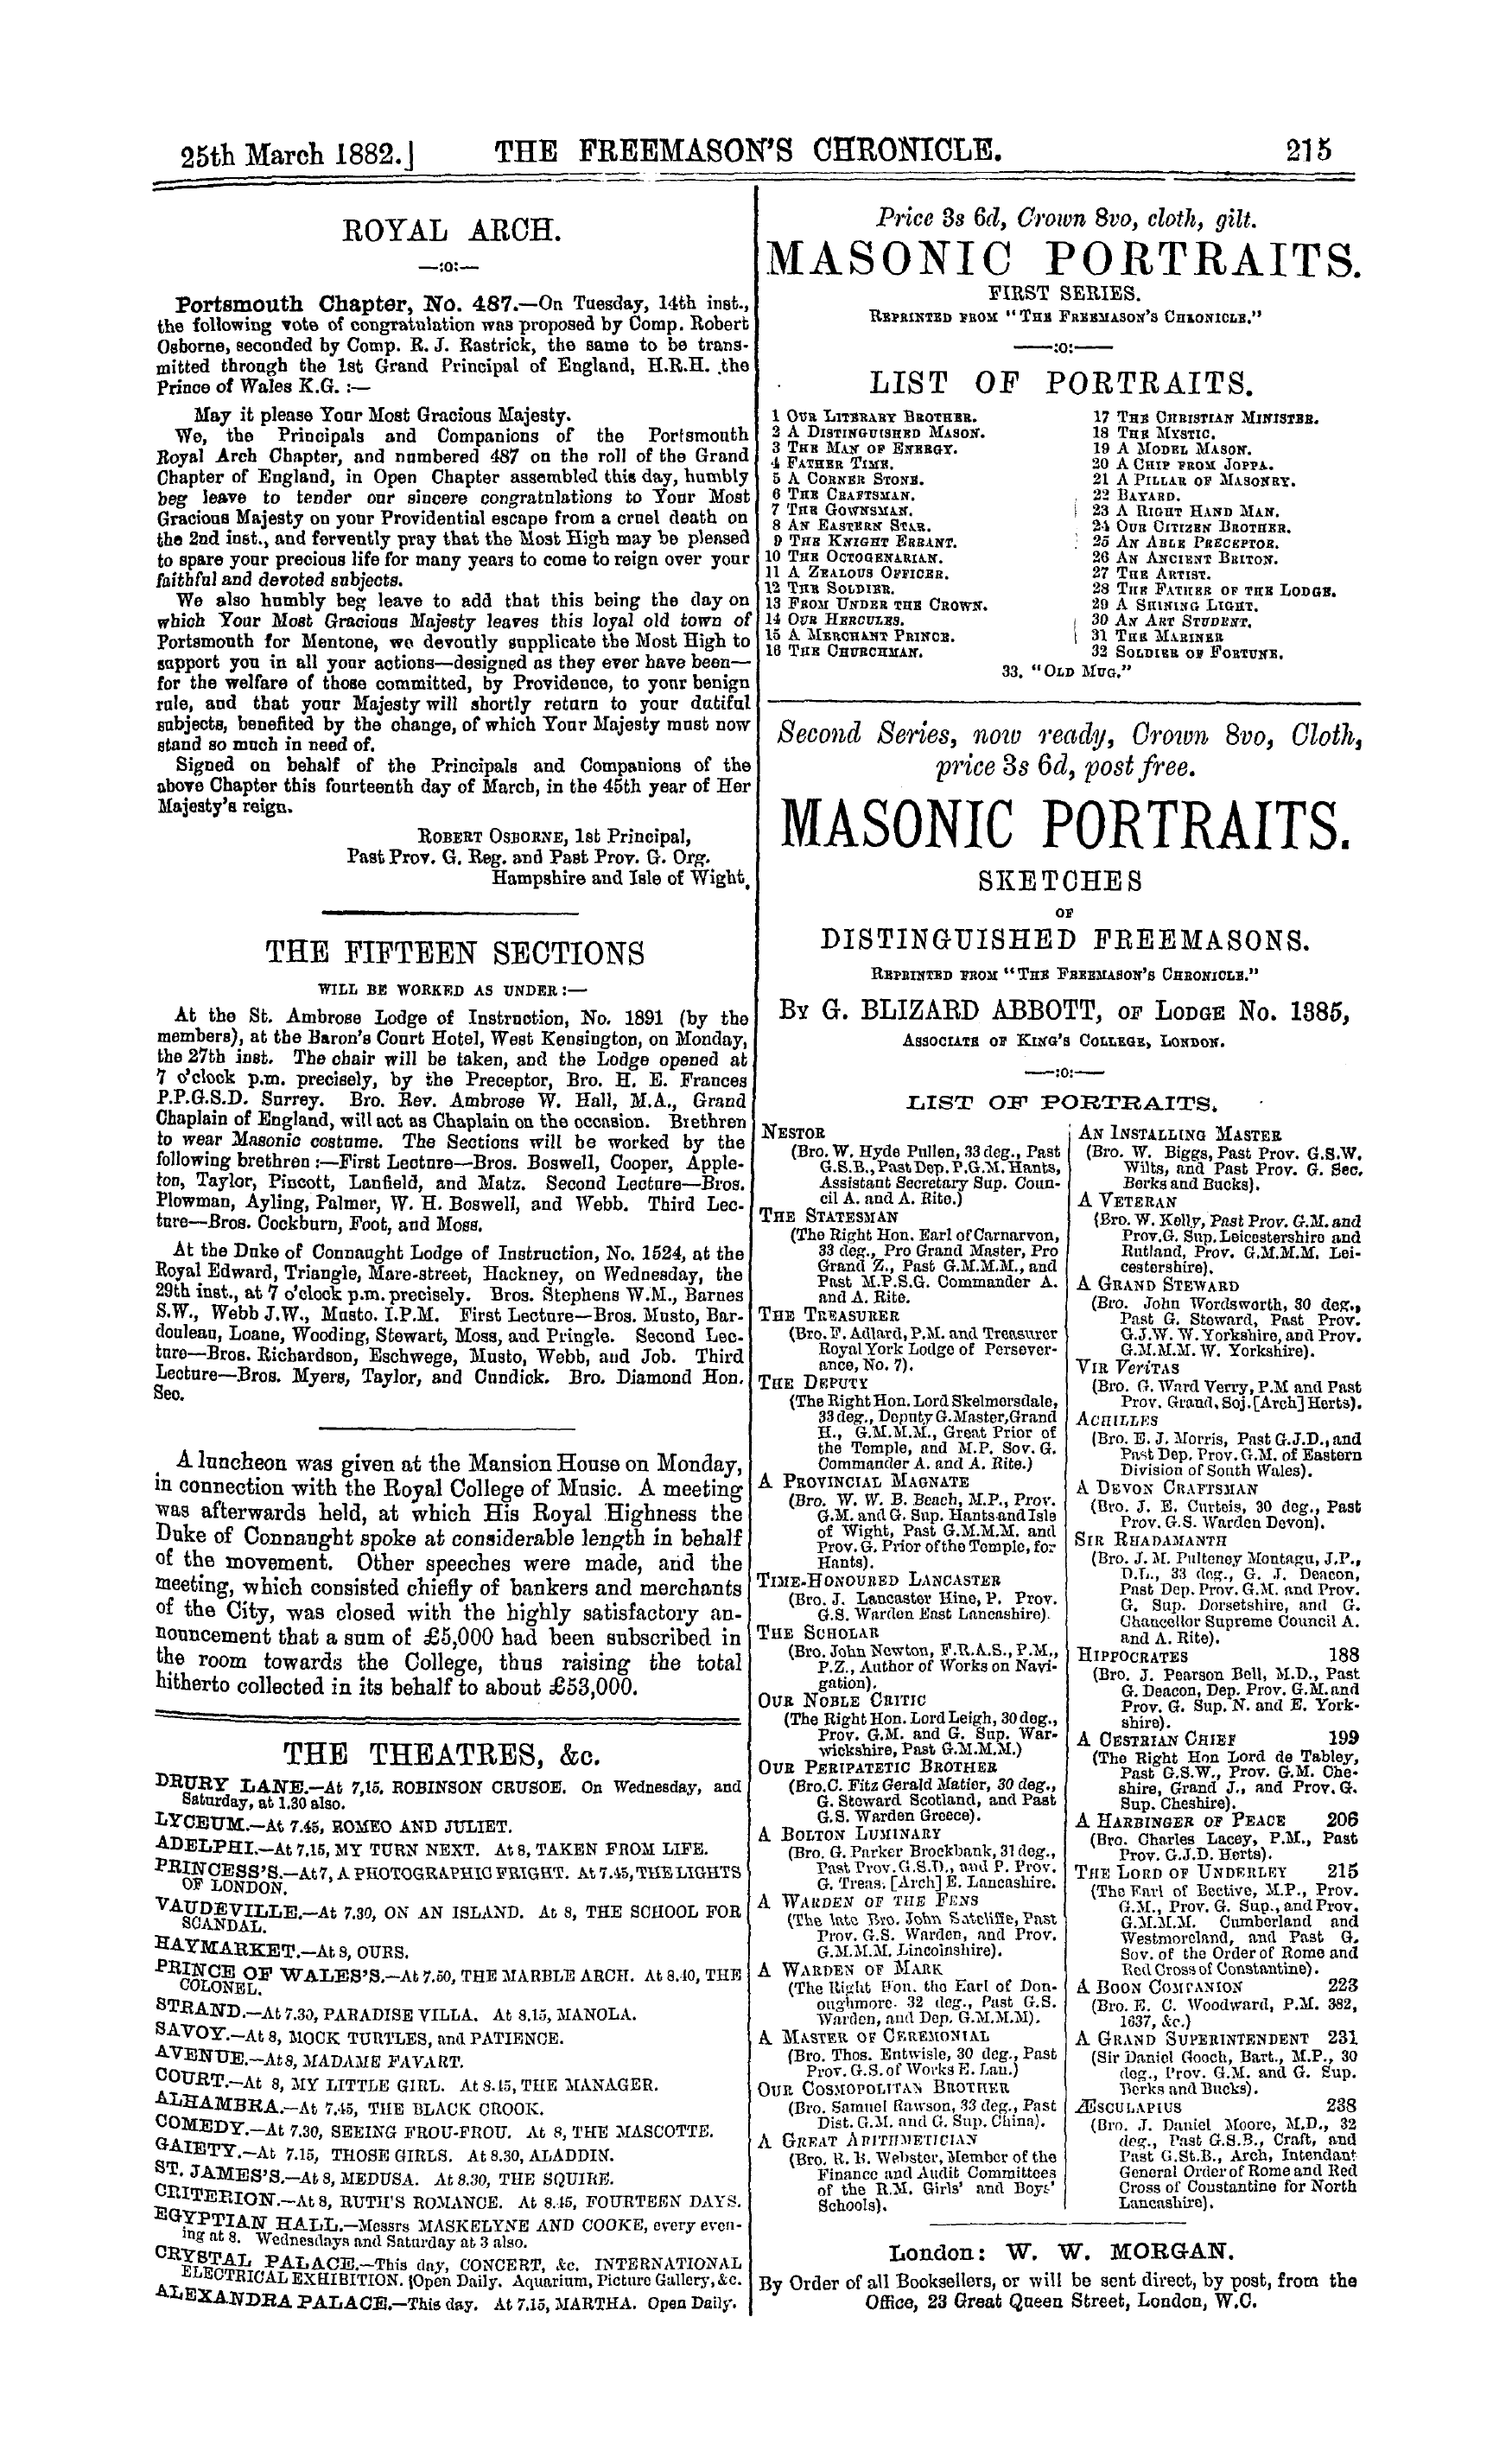 The Freemason's Chronicle: 1882-03-25 - Royal Arch.